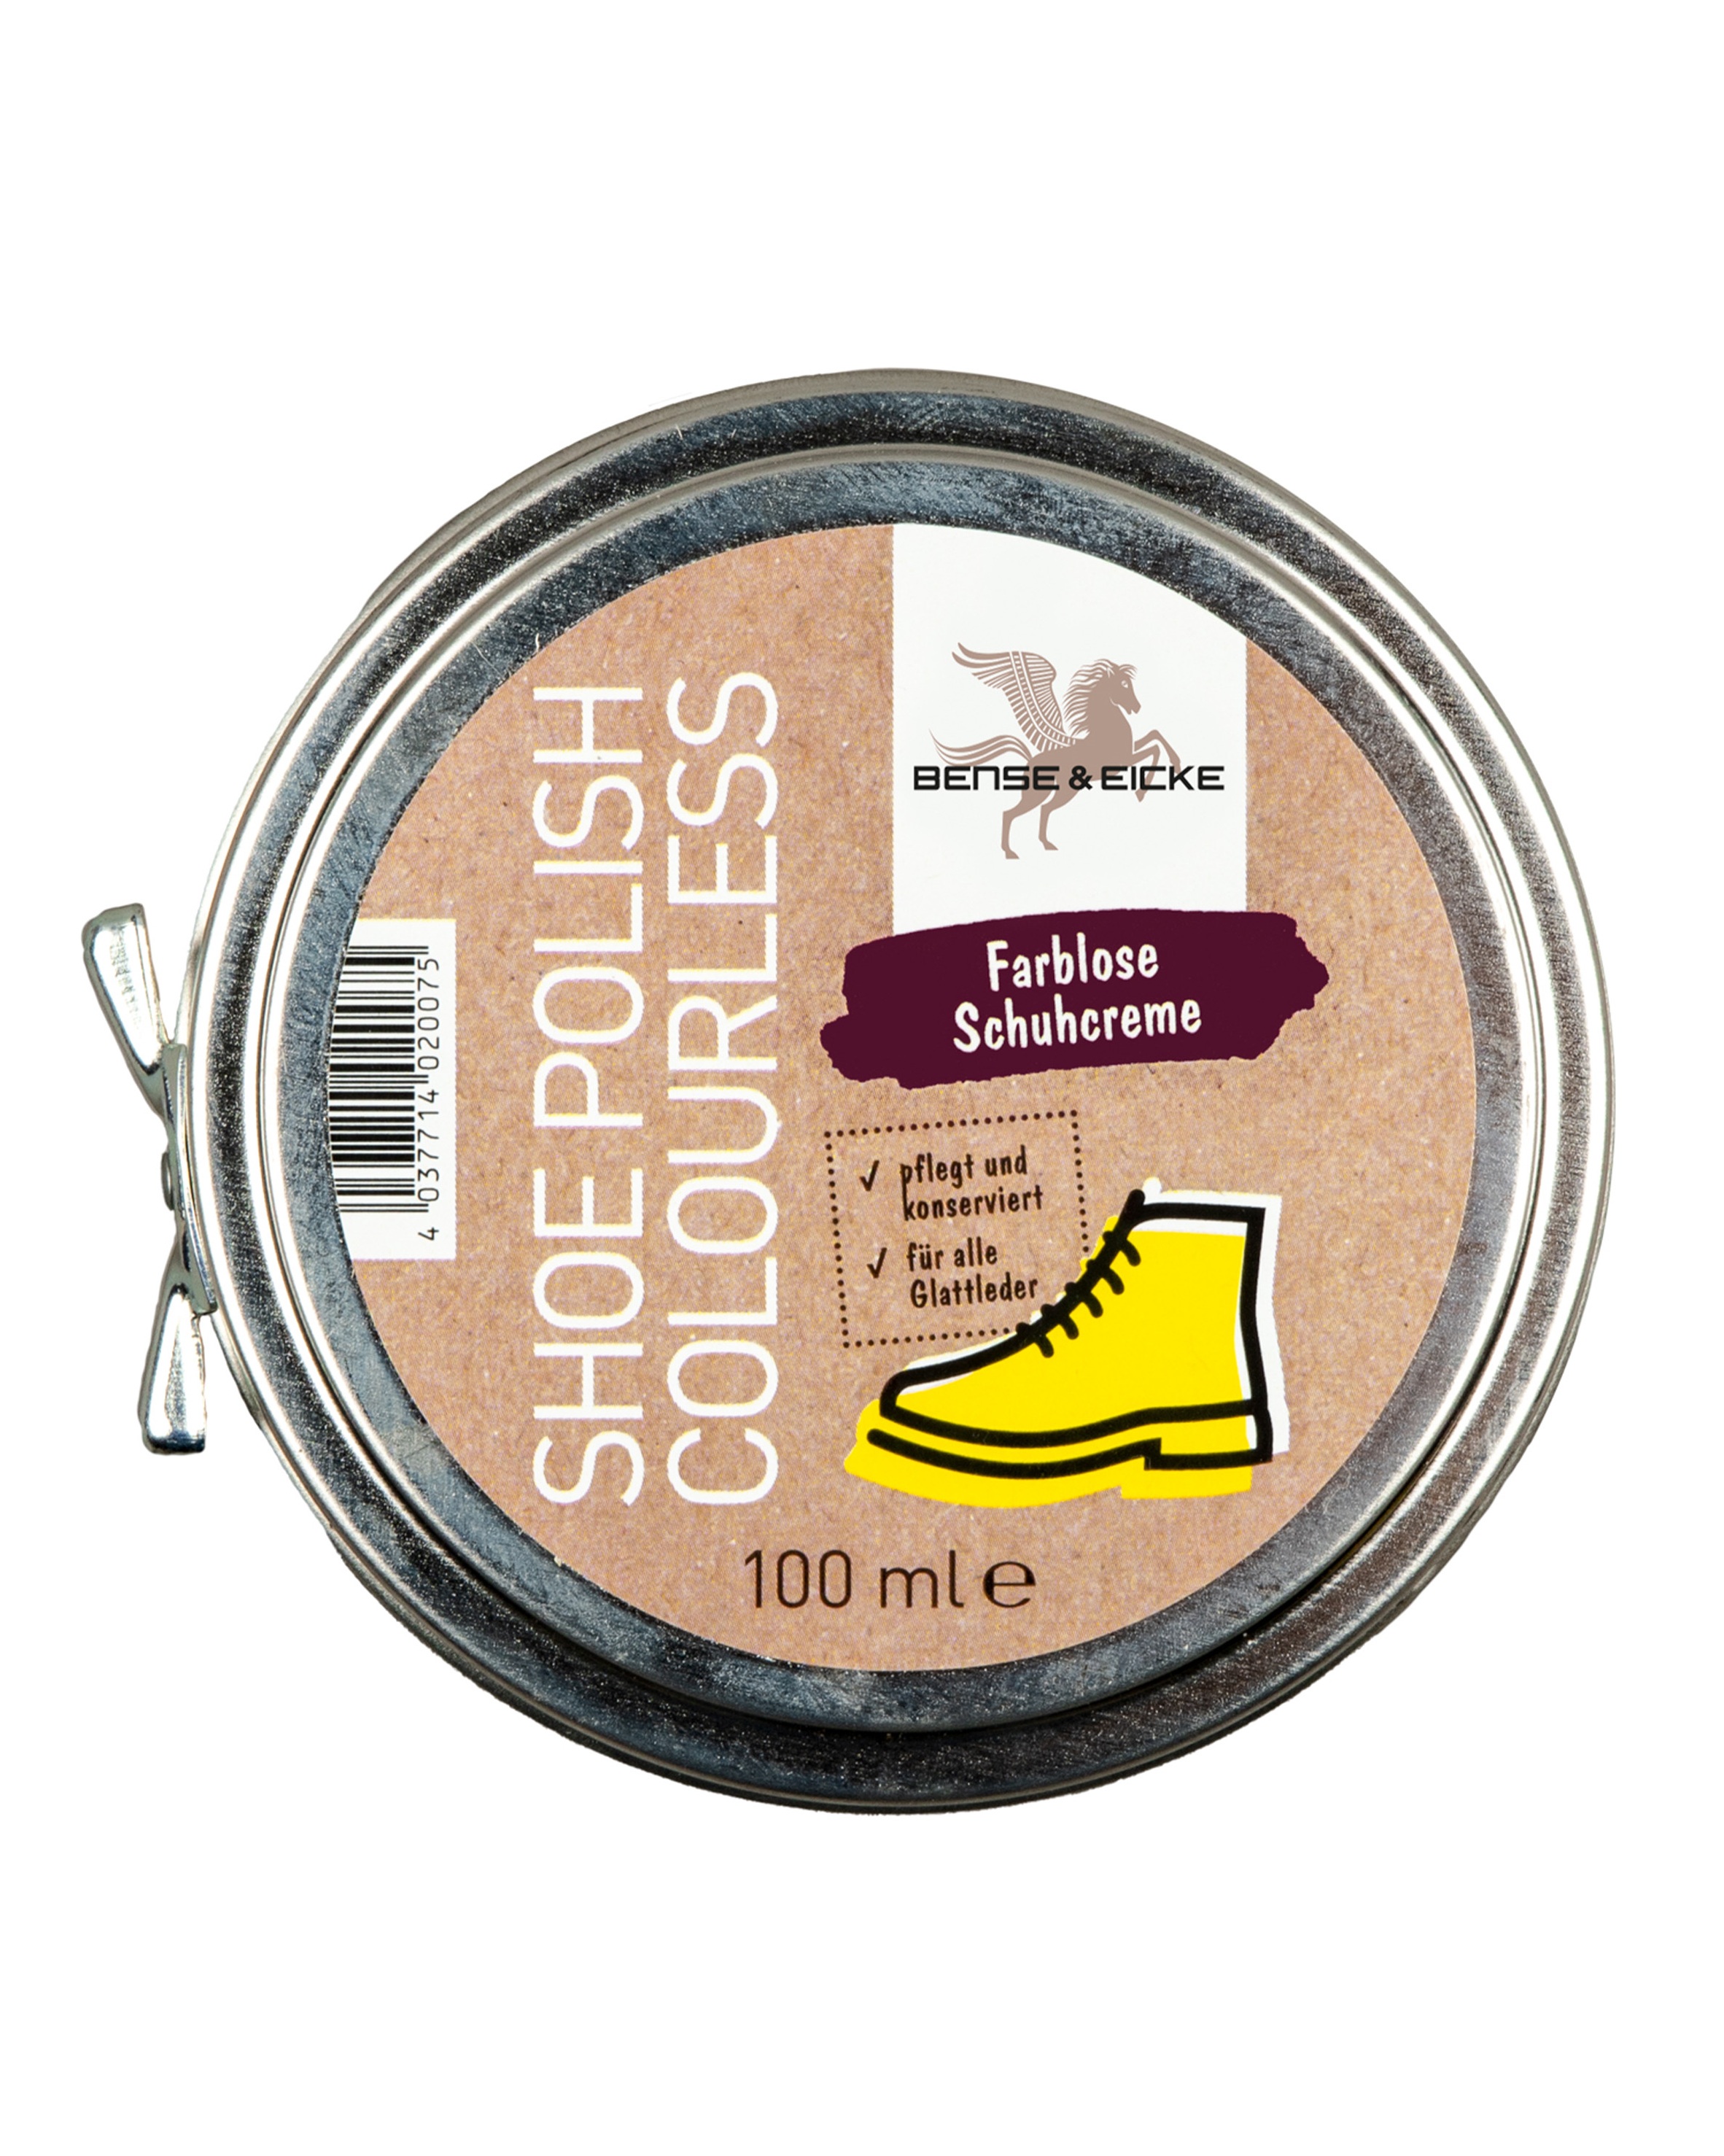 Shoe Polish colourless, 100 ml